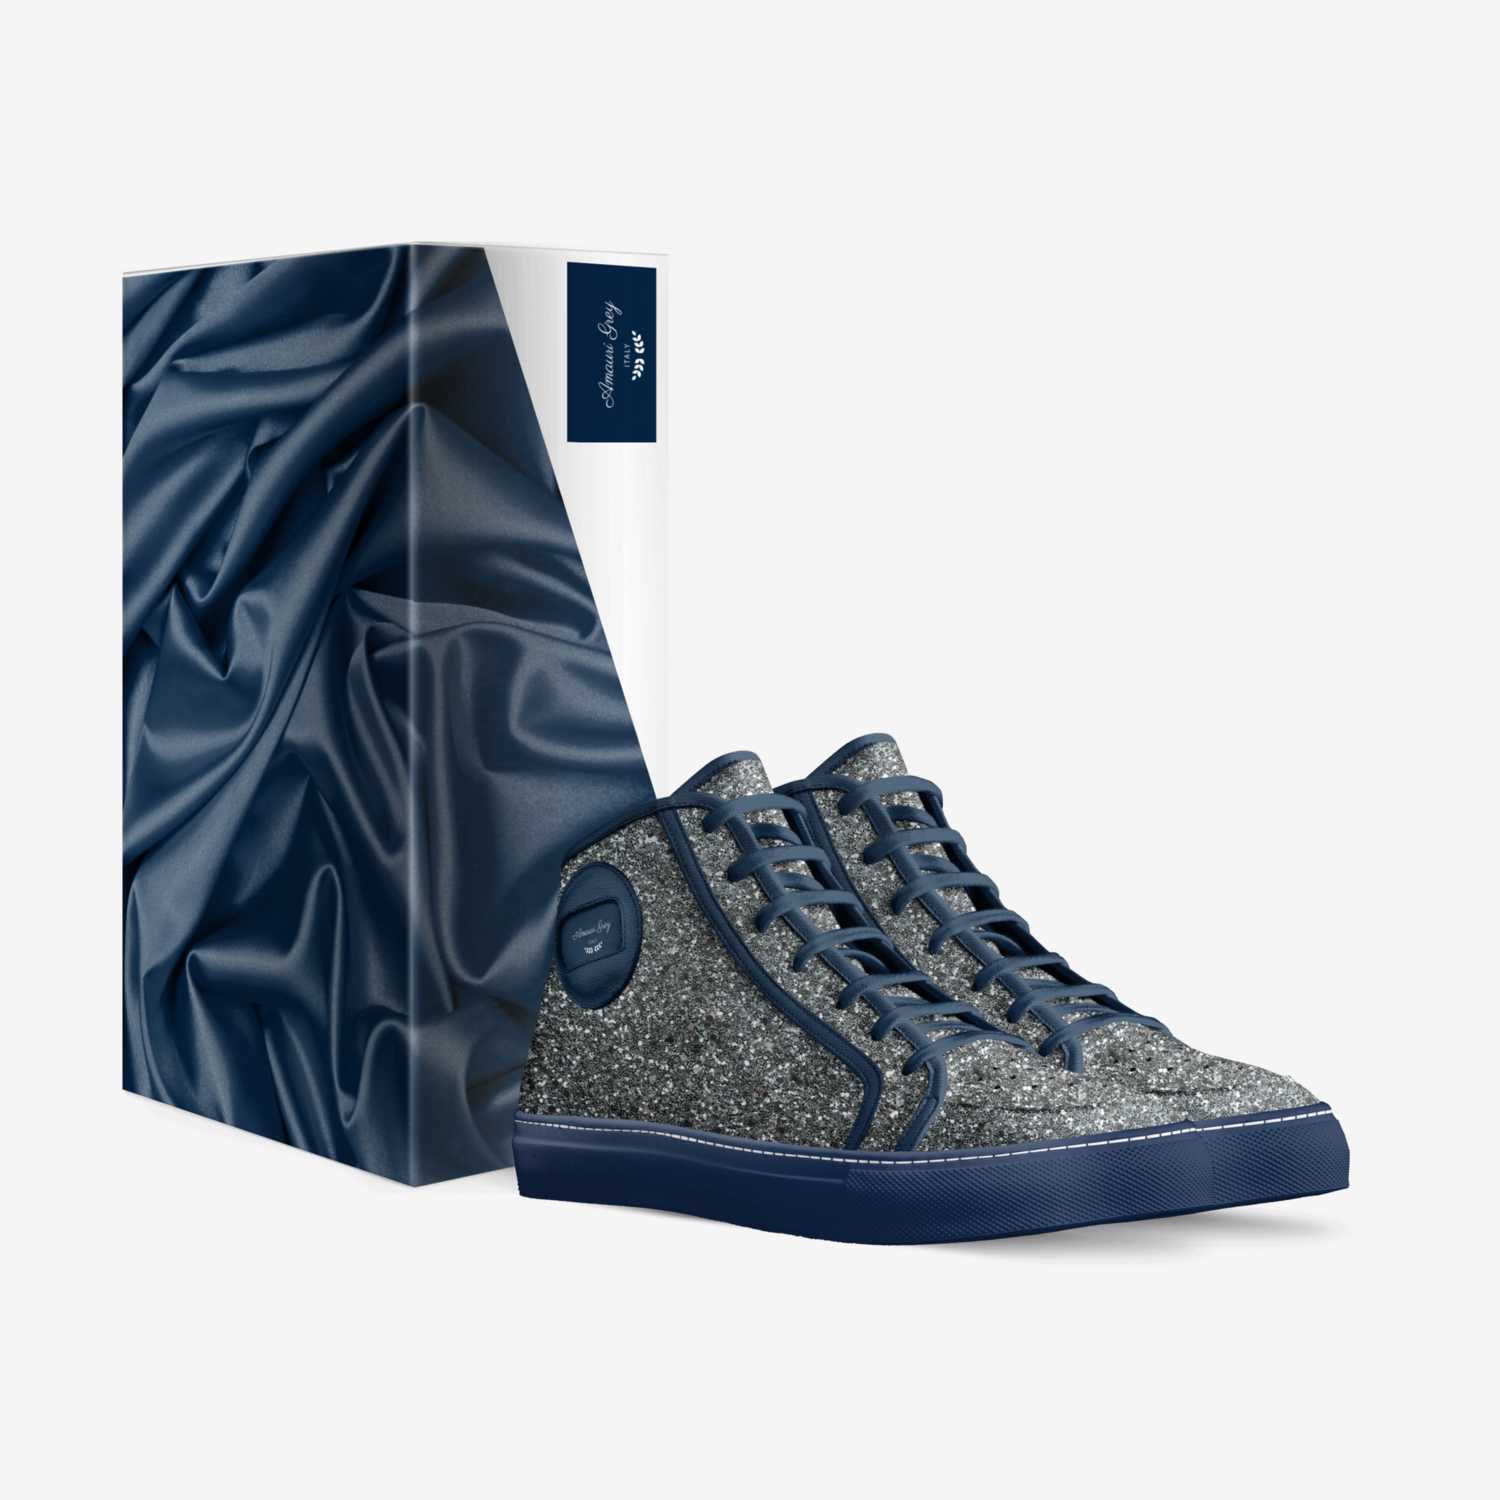 Amauri Grey custom made in Italy shoes by Naim Travis | Box view